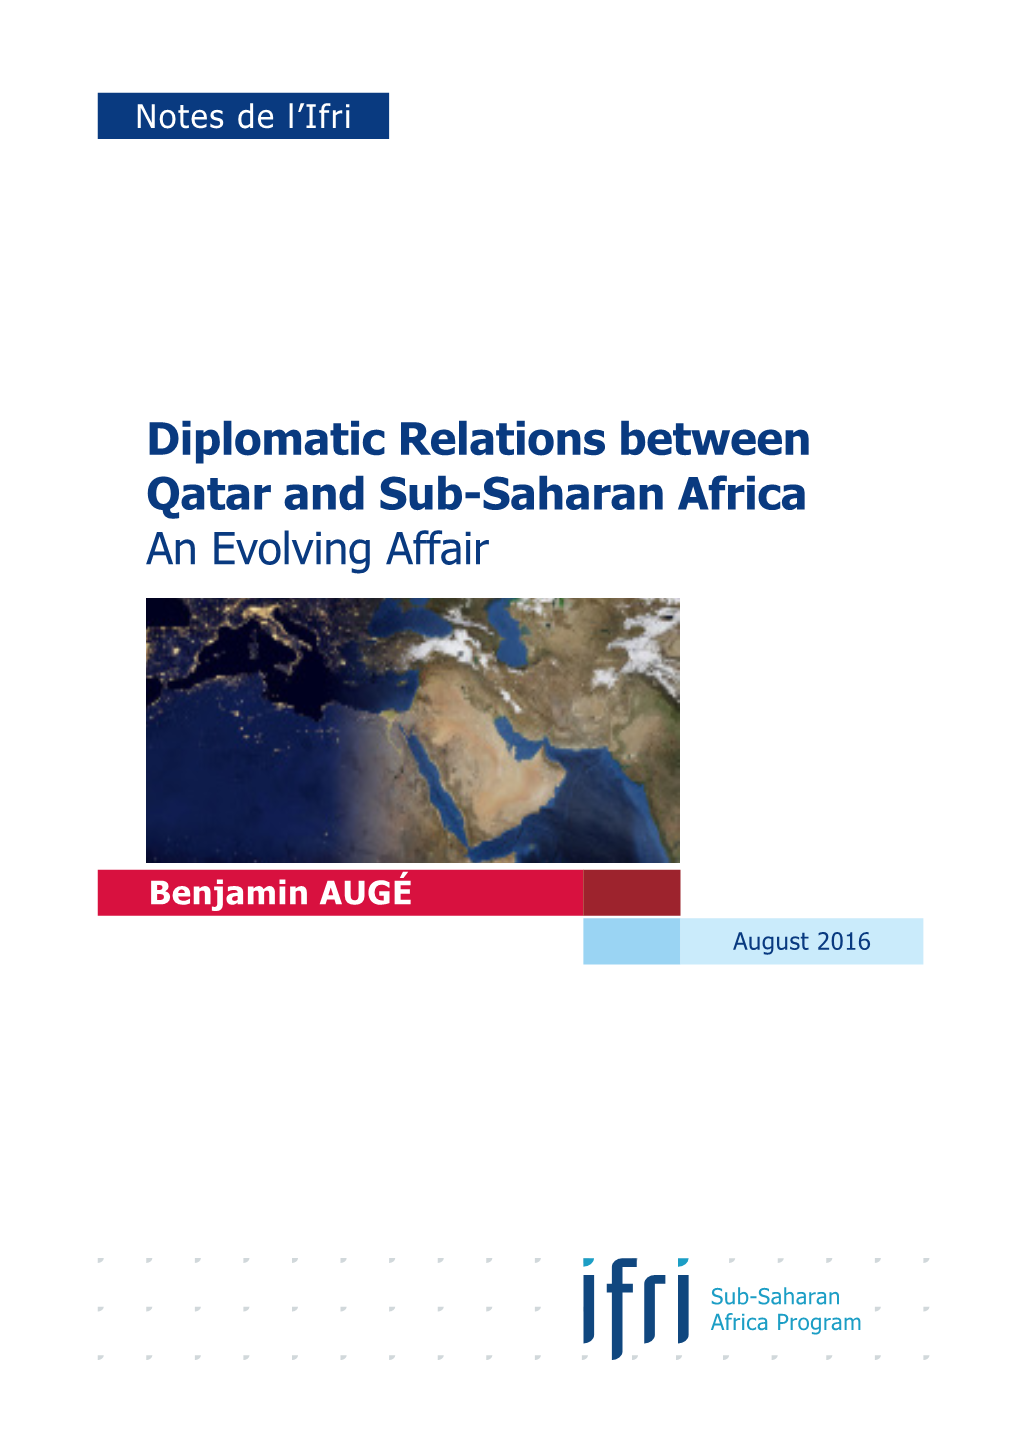 Diplomatic Relations Between Qatar and Sub-Saharan Africa an Evolving Affair